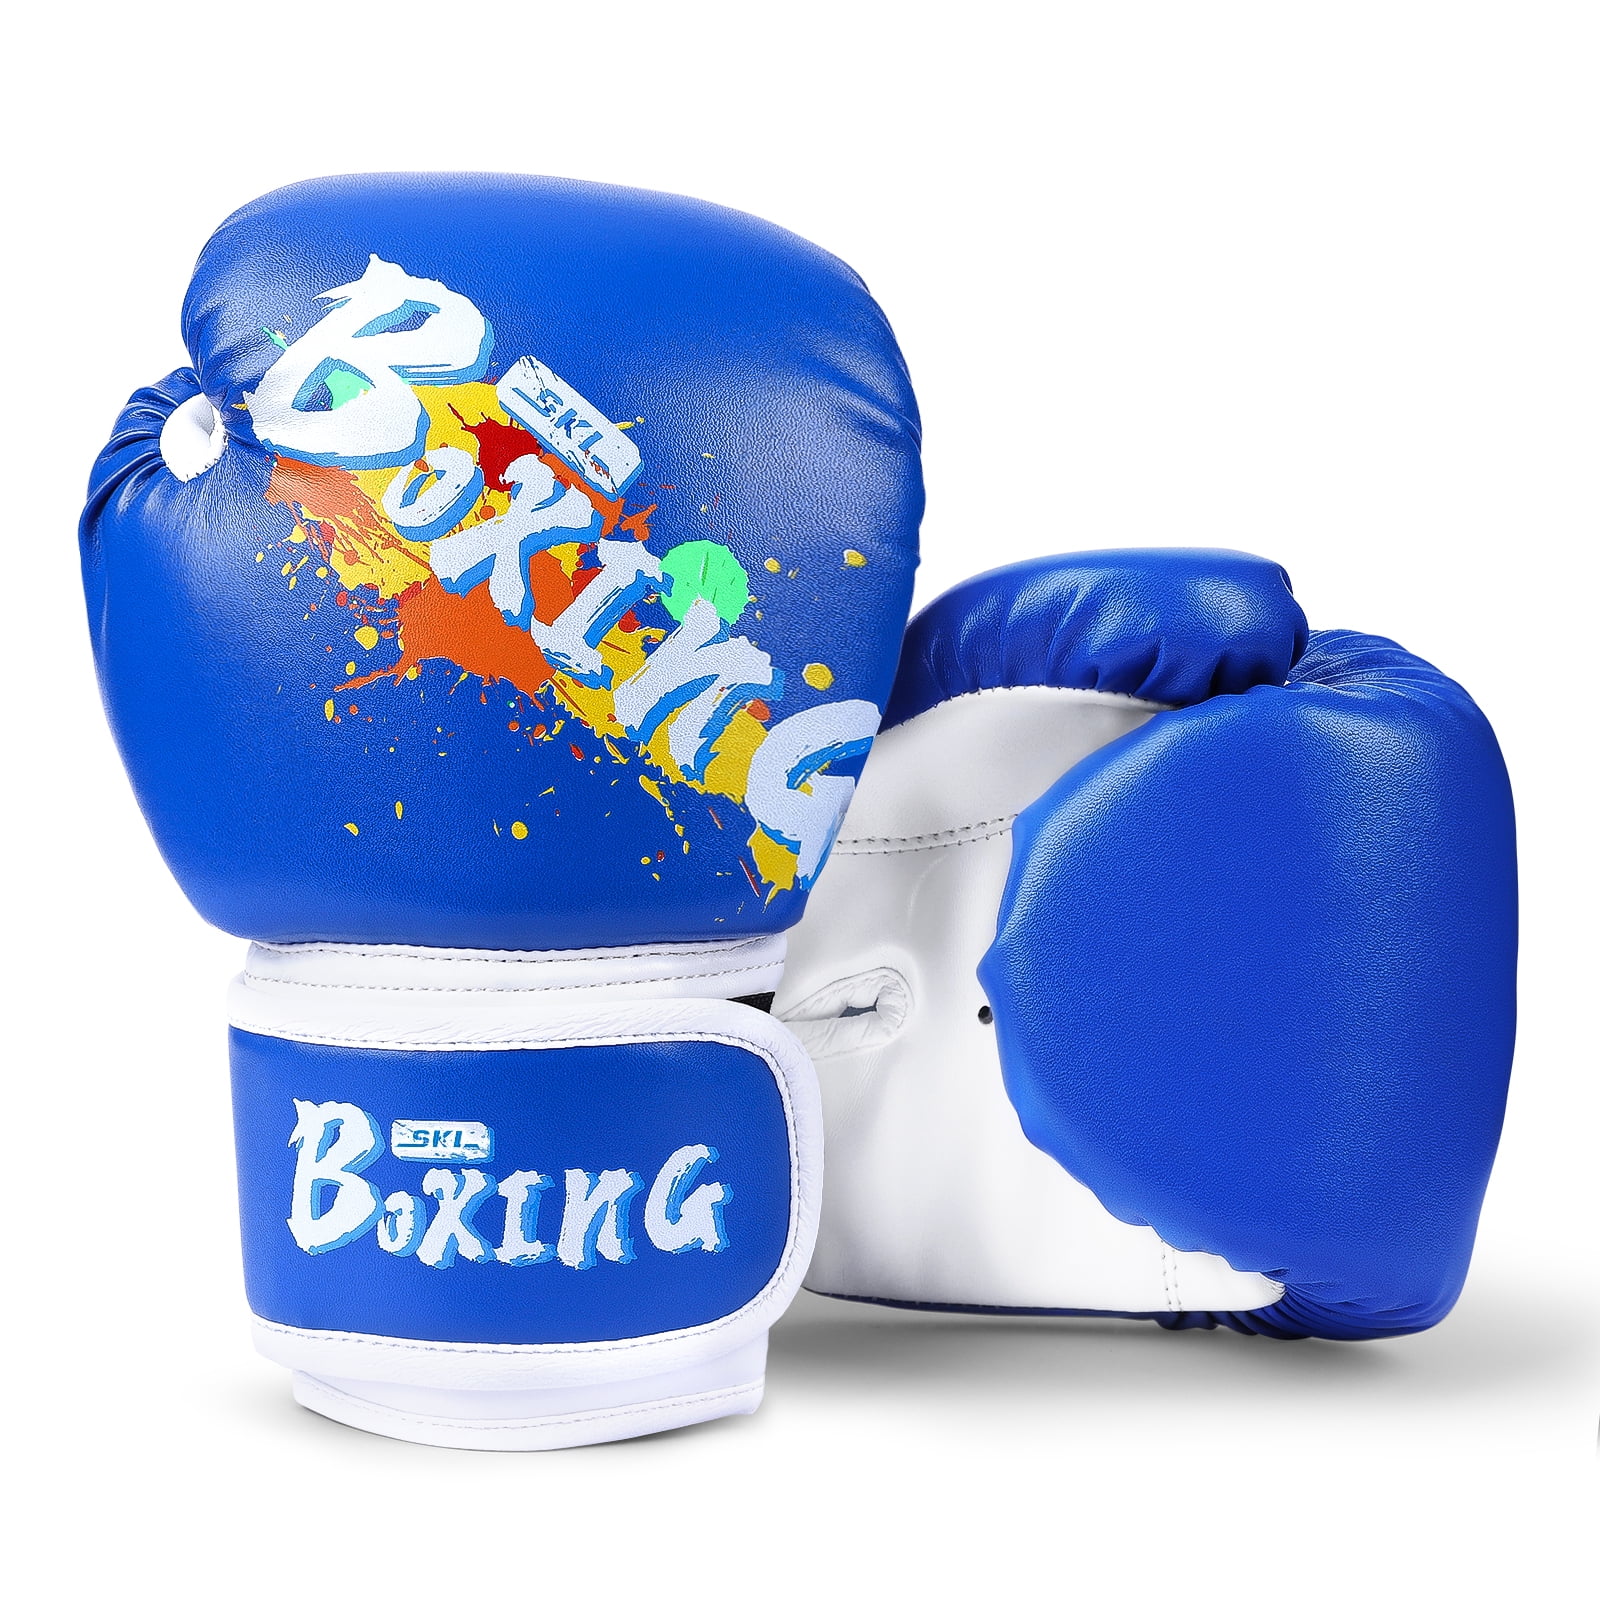 Majik Big Boppers Boxing Gloves E5 E11 for sale online 